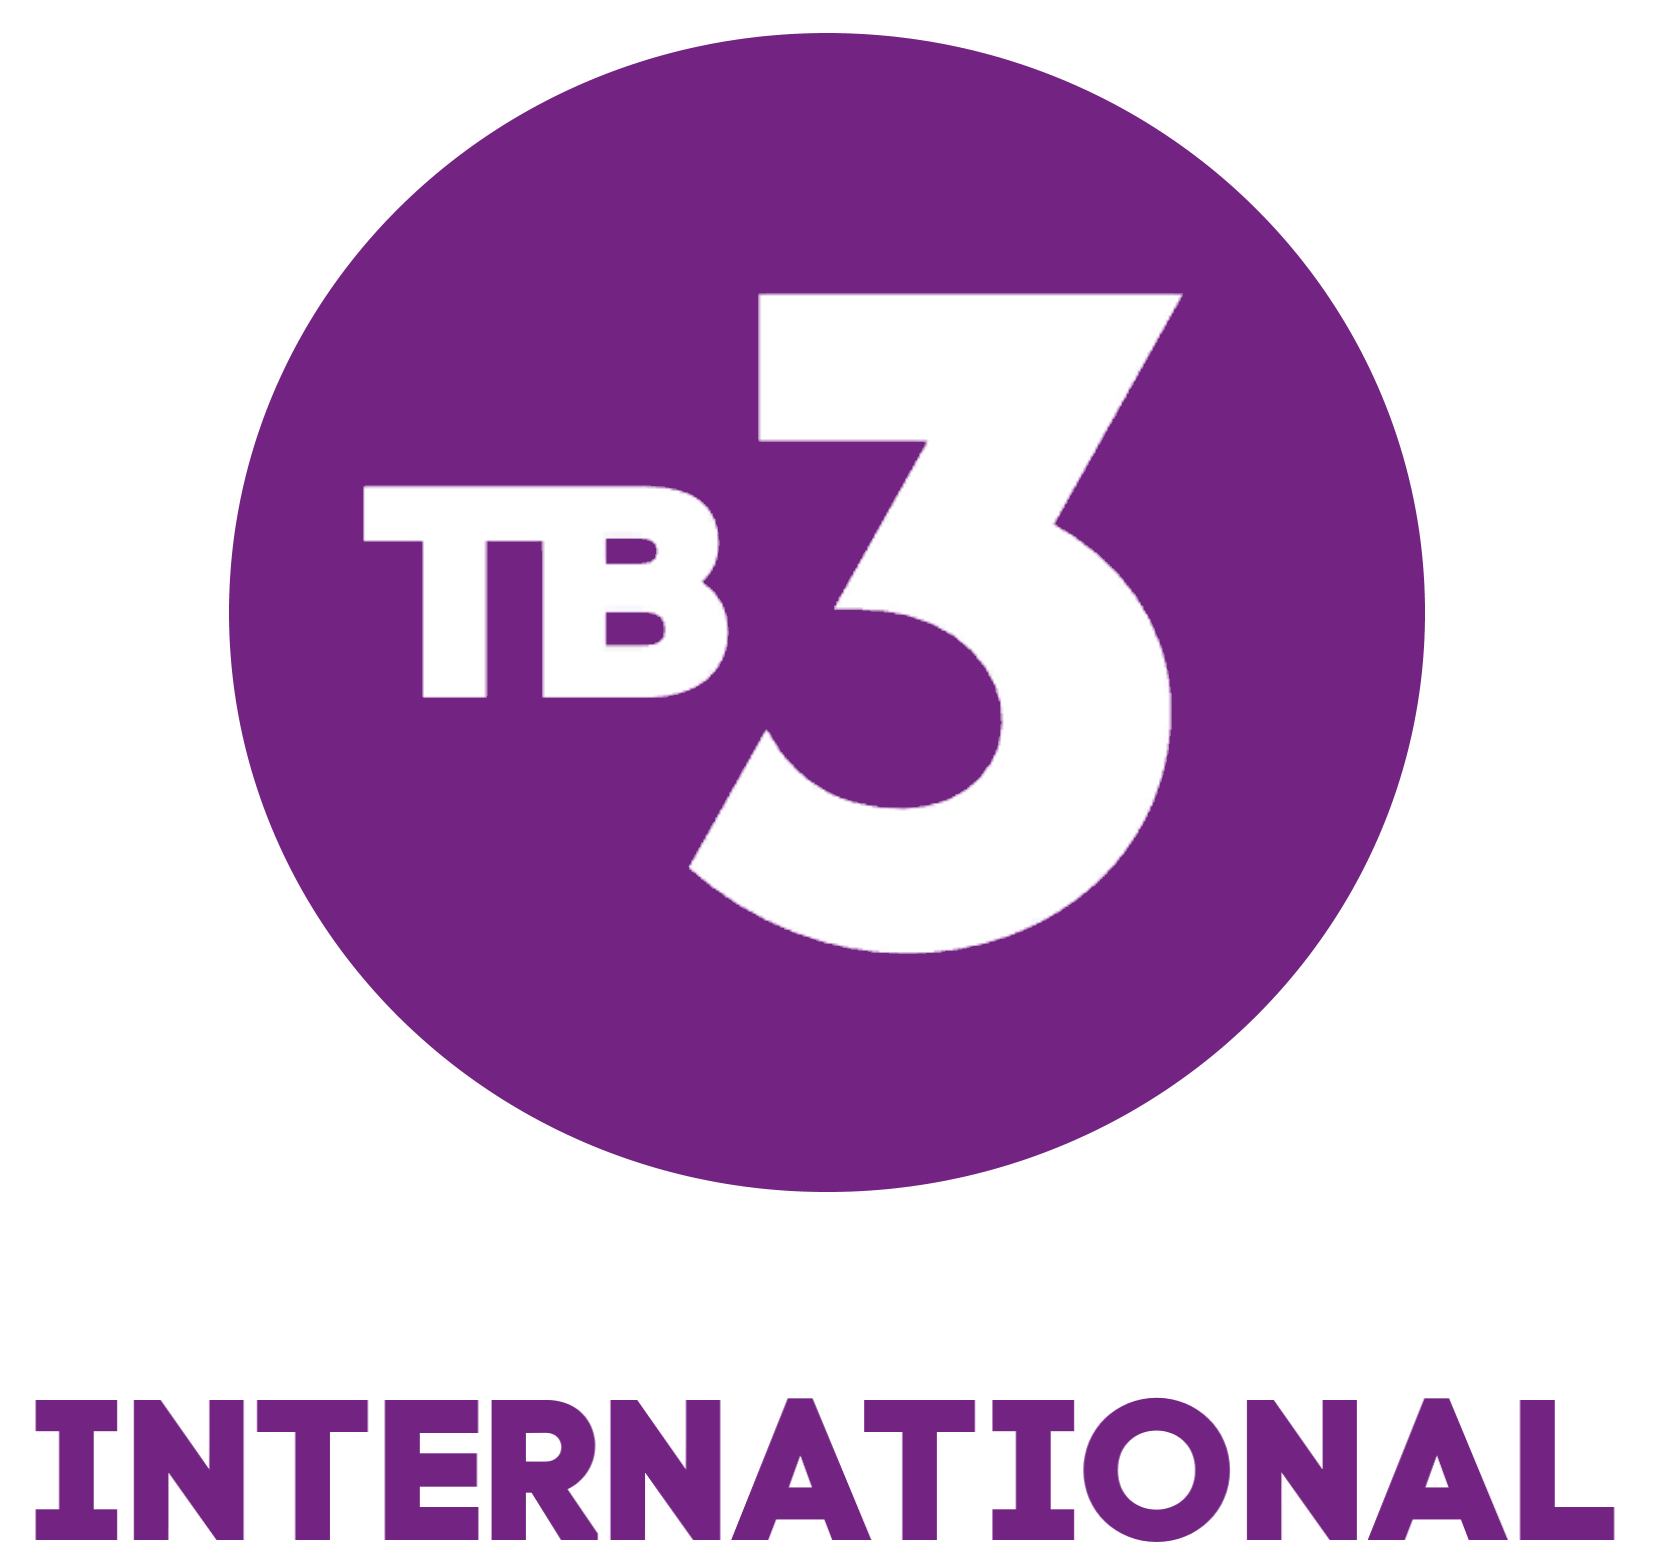 ТВ 3 International